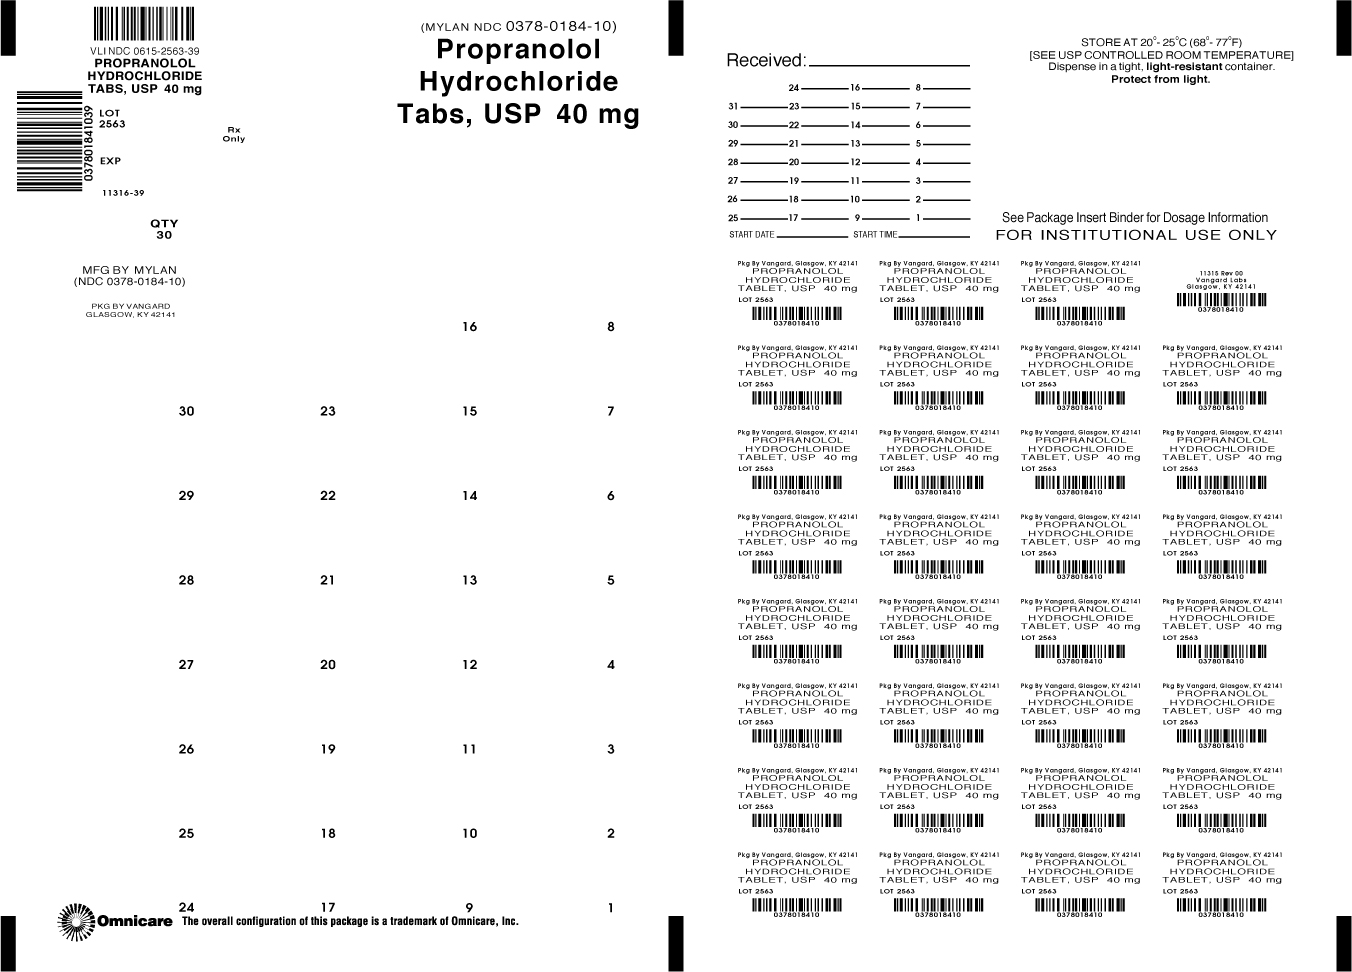 Principal Display Panel- Propranolol Hydrochloride Tabs, USP 40mg